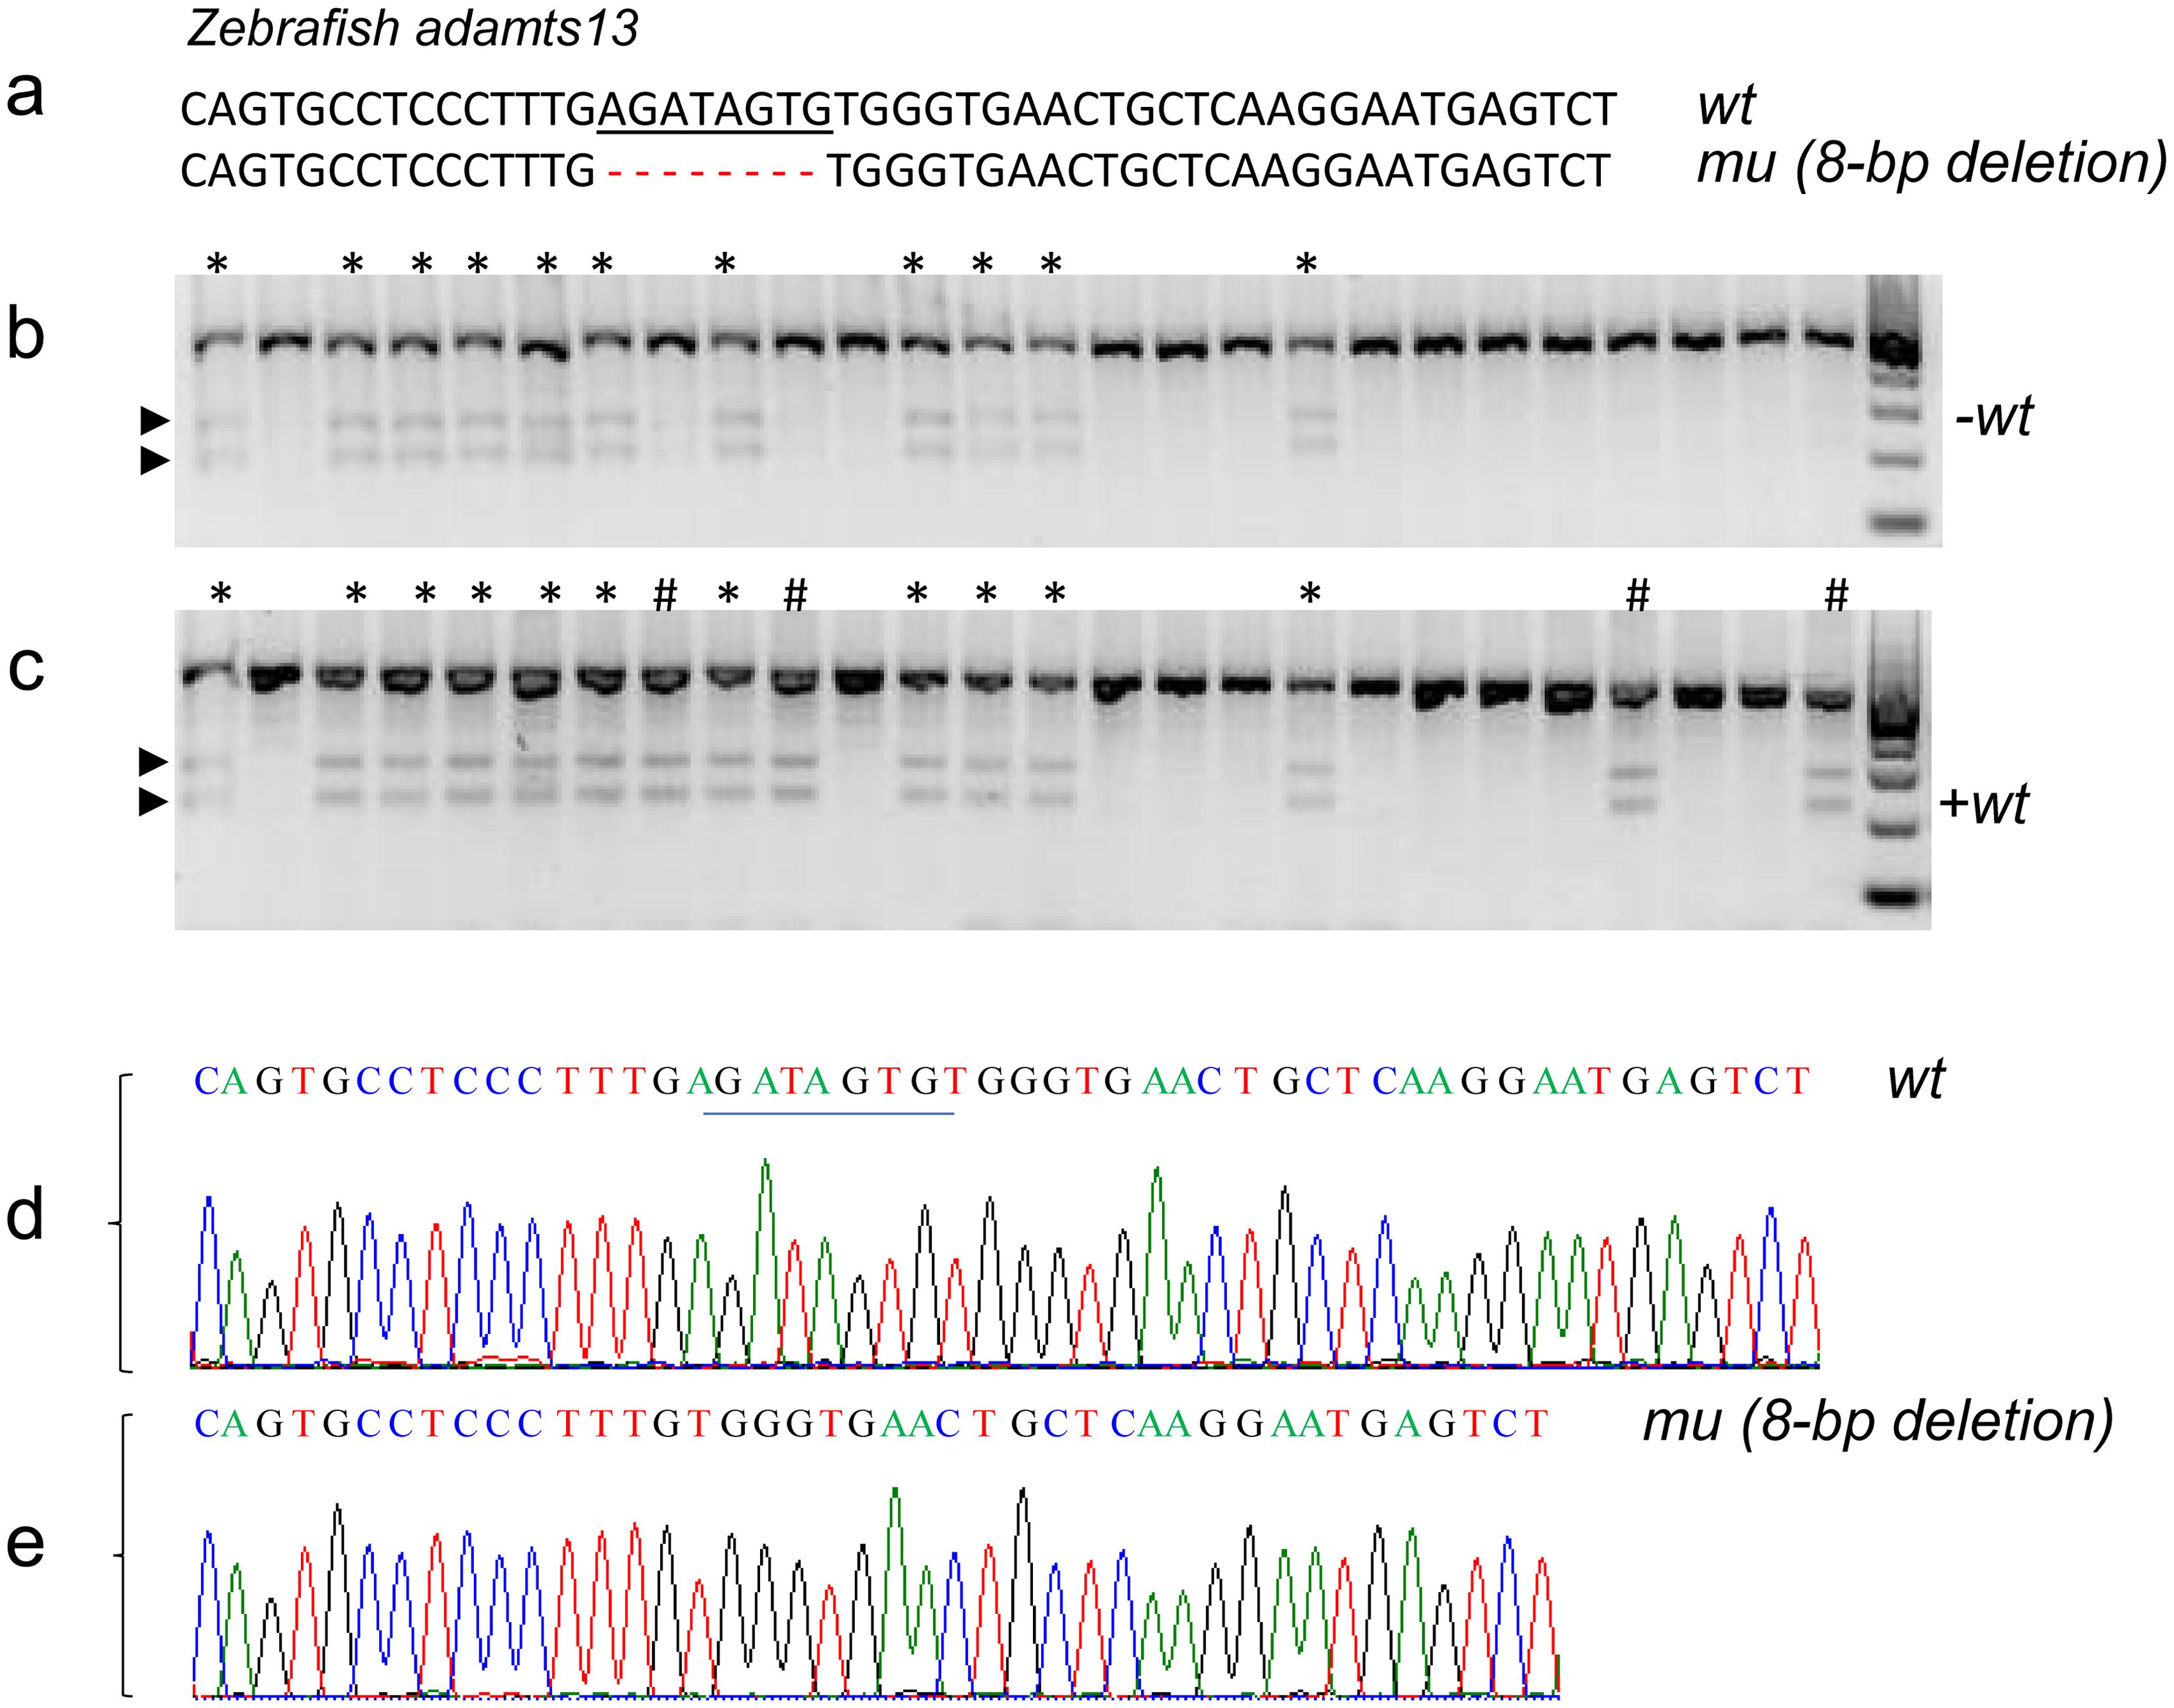 Genotyping <italic>wild-type</italic>, heterozygous, and homozygous 8 bp-deletion mutation in zebrafish <italic>adamts13</italic>.